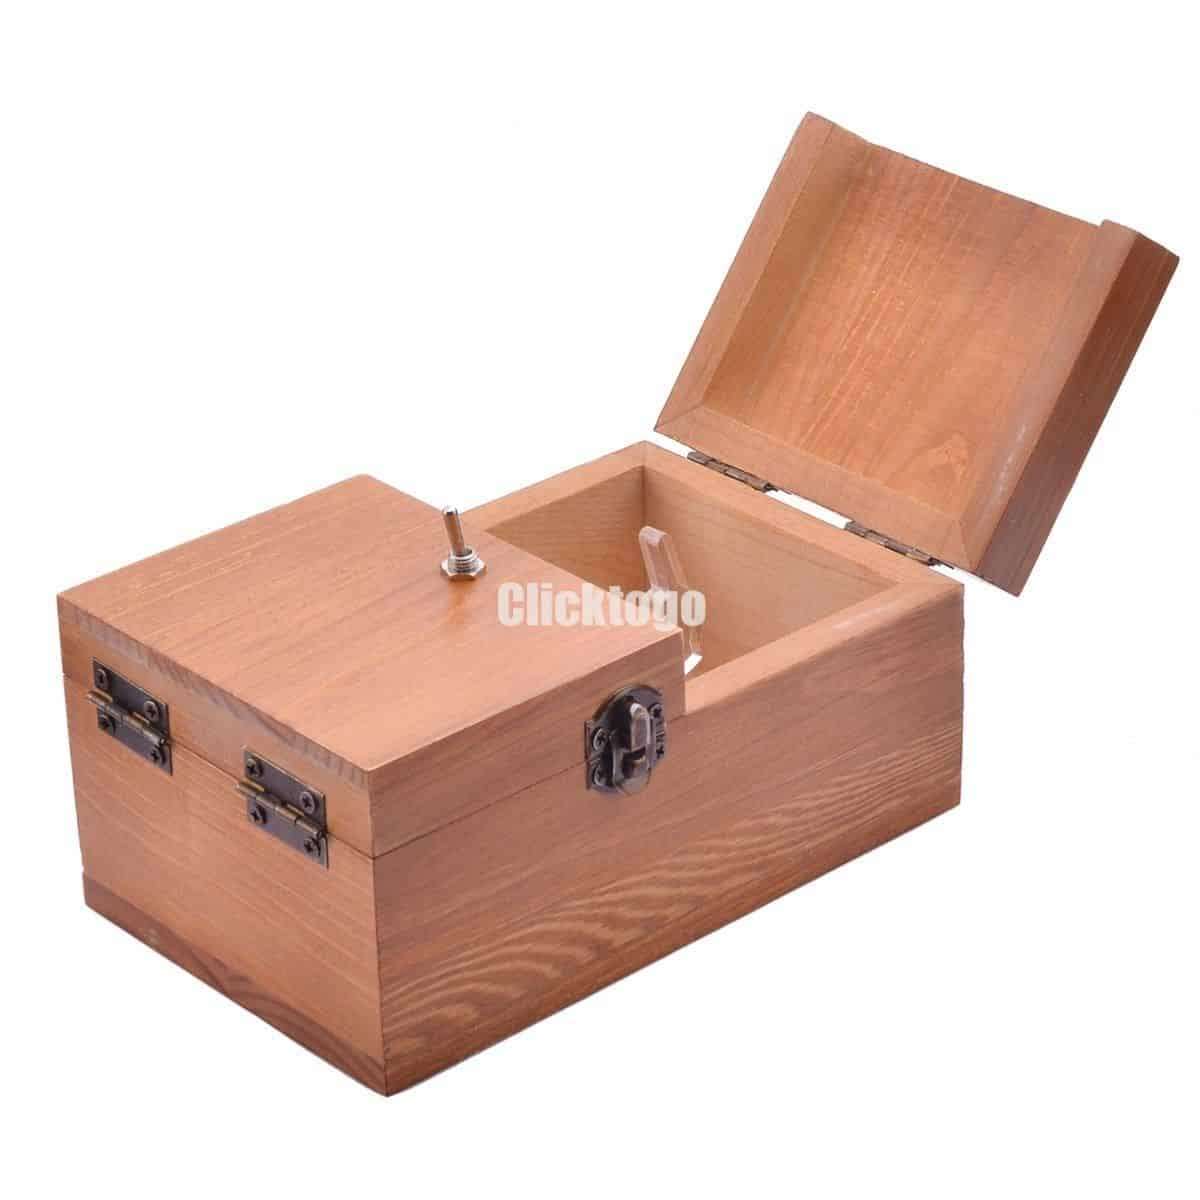 „Useless Box“ aus echtem Holz für nur 13,23 Euro (inkl. Versand + zollfrei)!